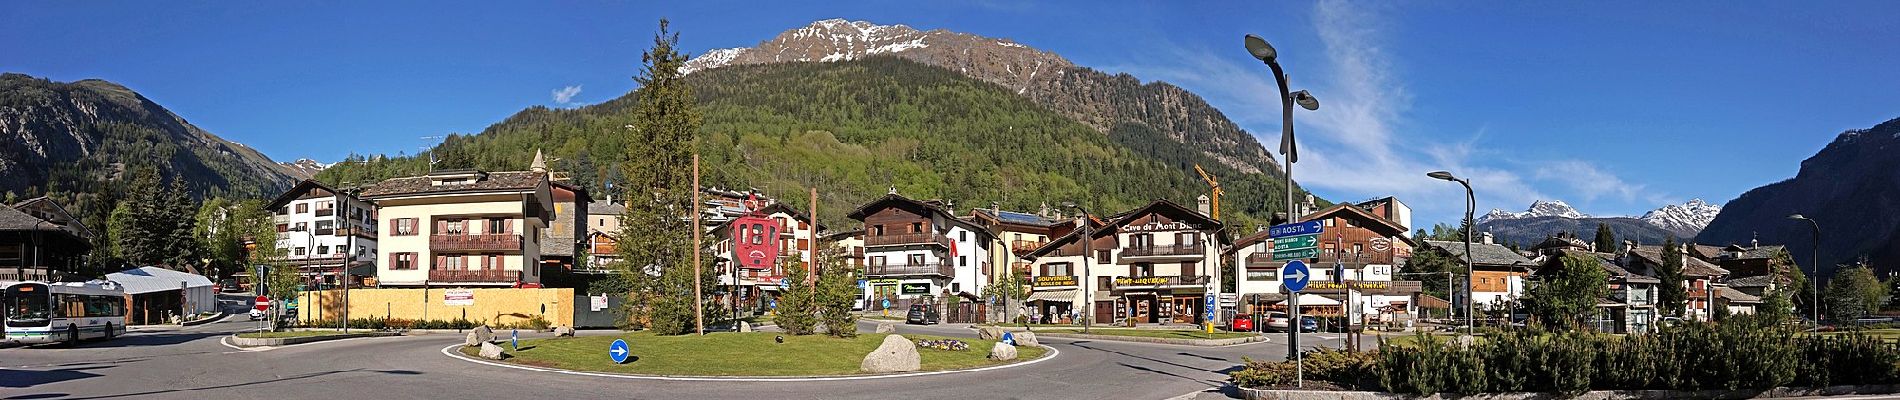 Trail On foot Courmayeur - Alta Via n. 2 della Valle d'Aosta - Tappa 1 - Photo